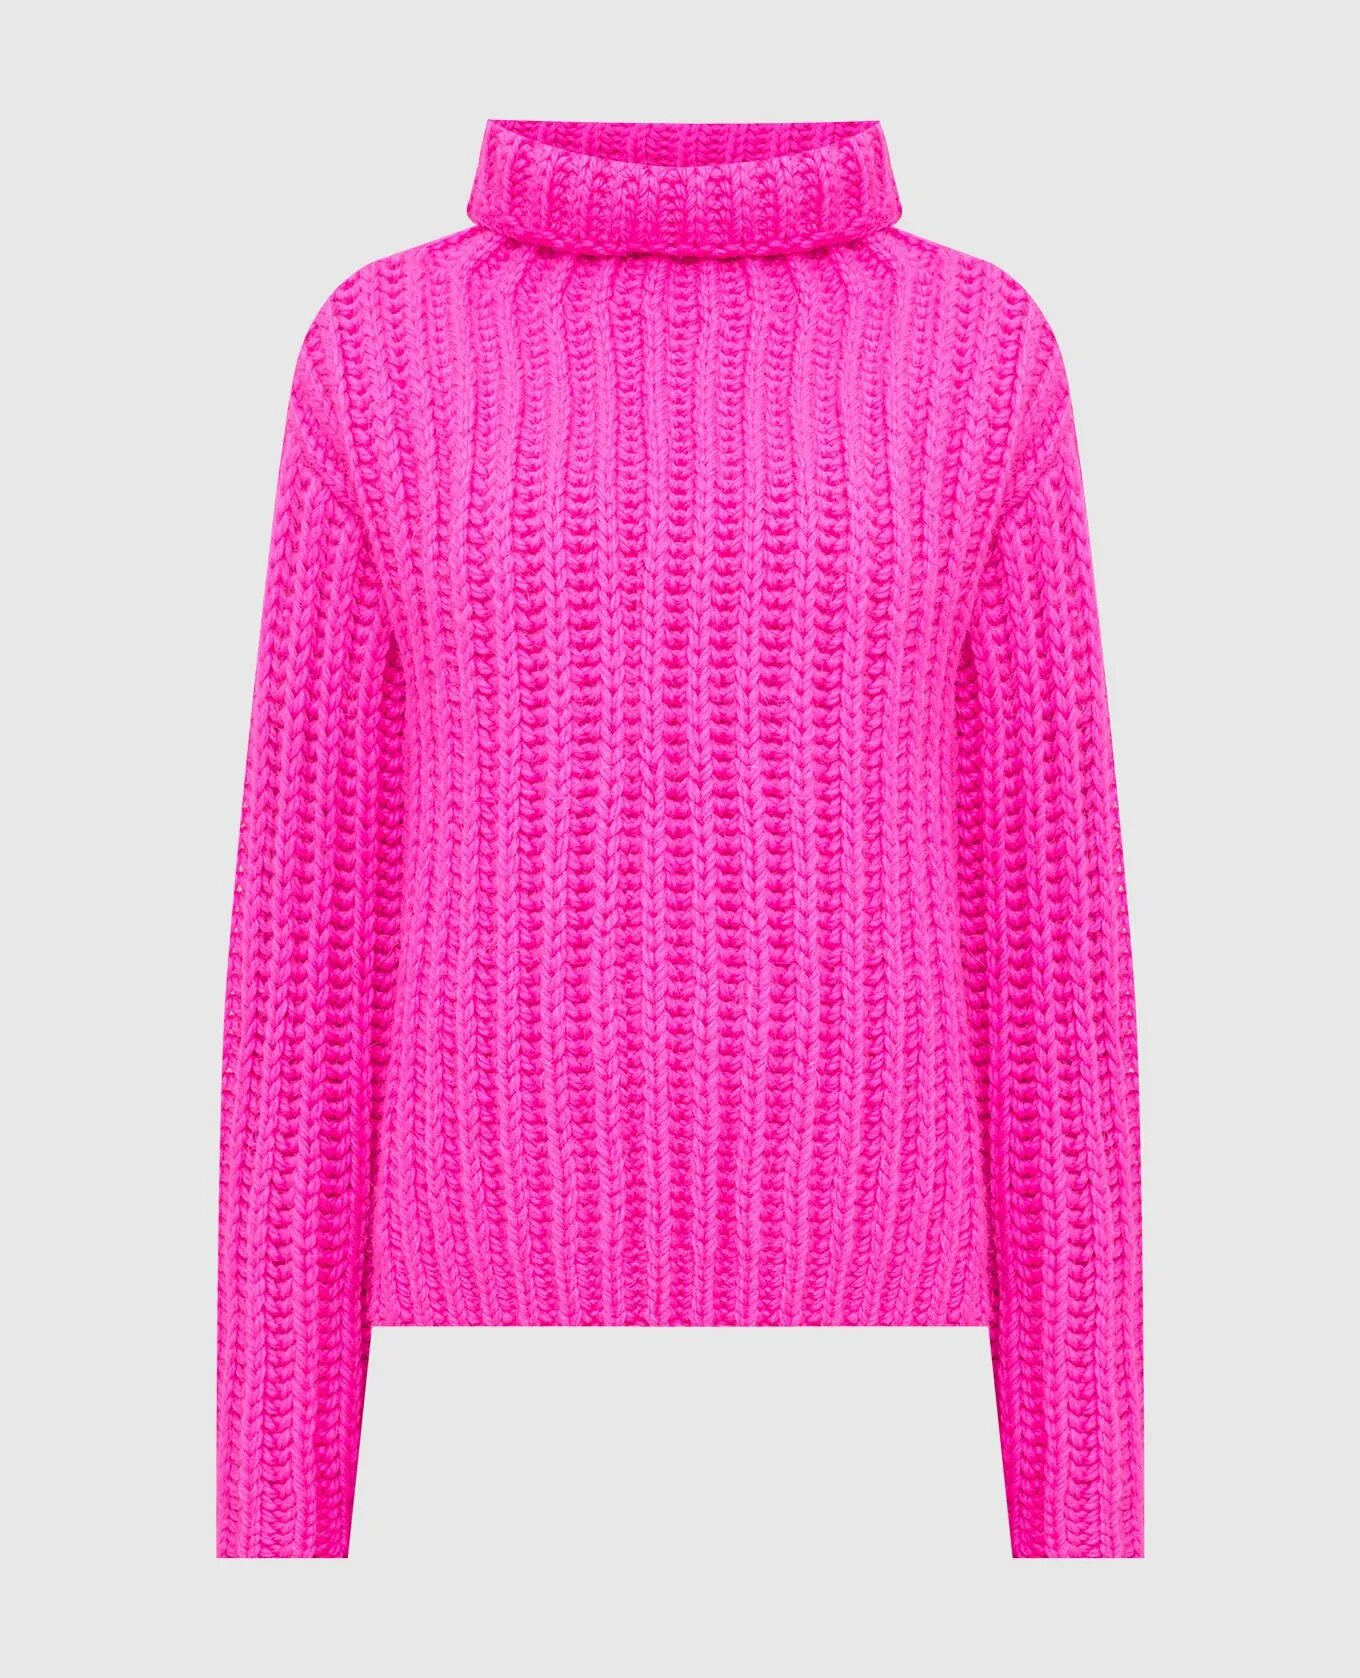 Valentino розовый свитер. Ярко розовый свитер. Красно розовый свитер. Ярко розовый пуловер. Песни розовый свитер